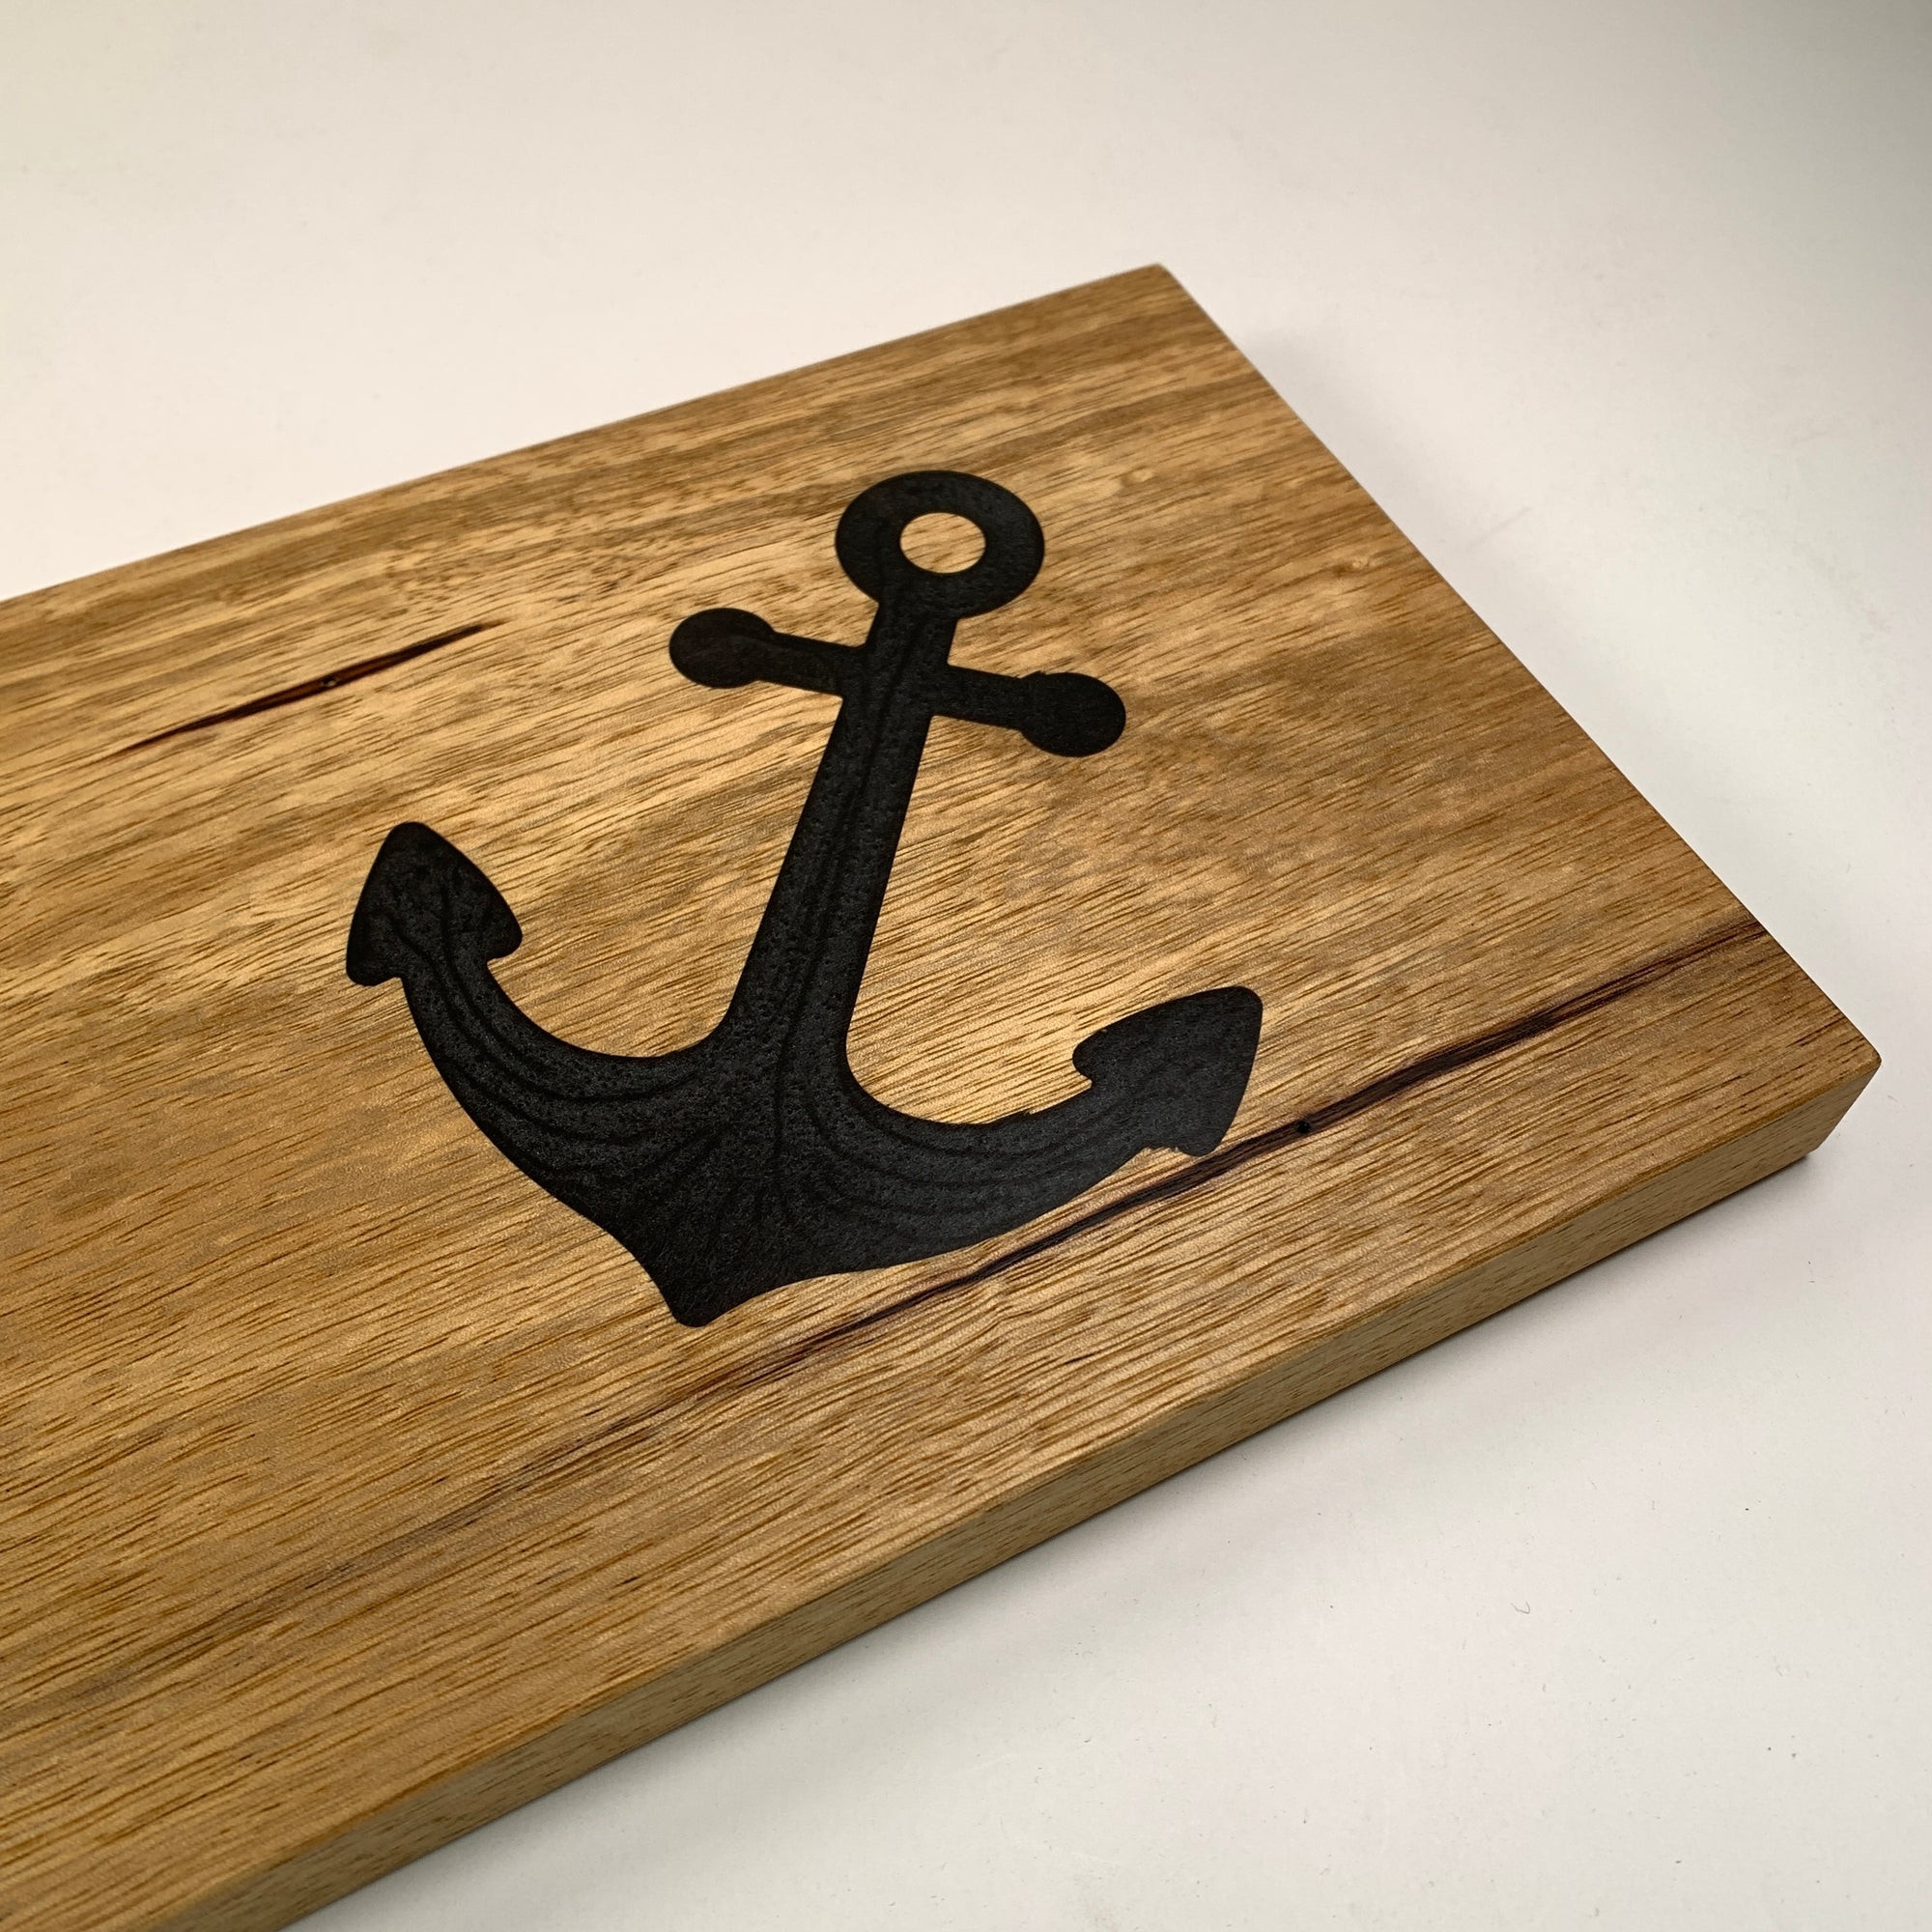 Blonde Limba Board with Nautical theme